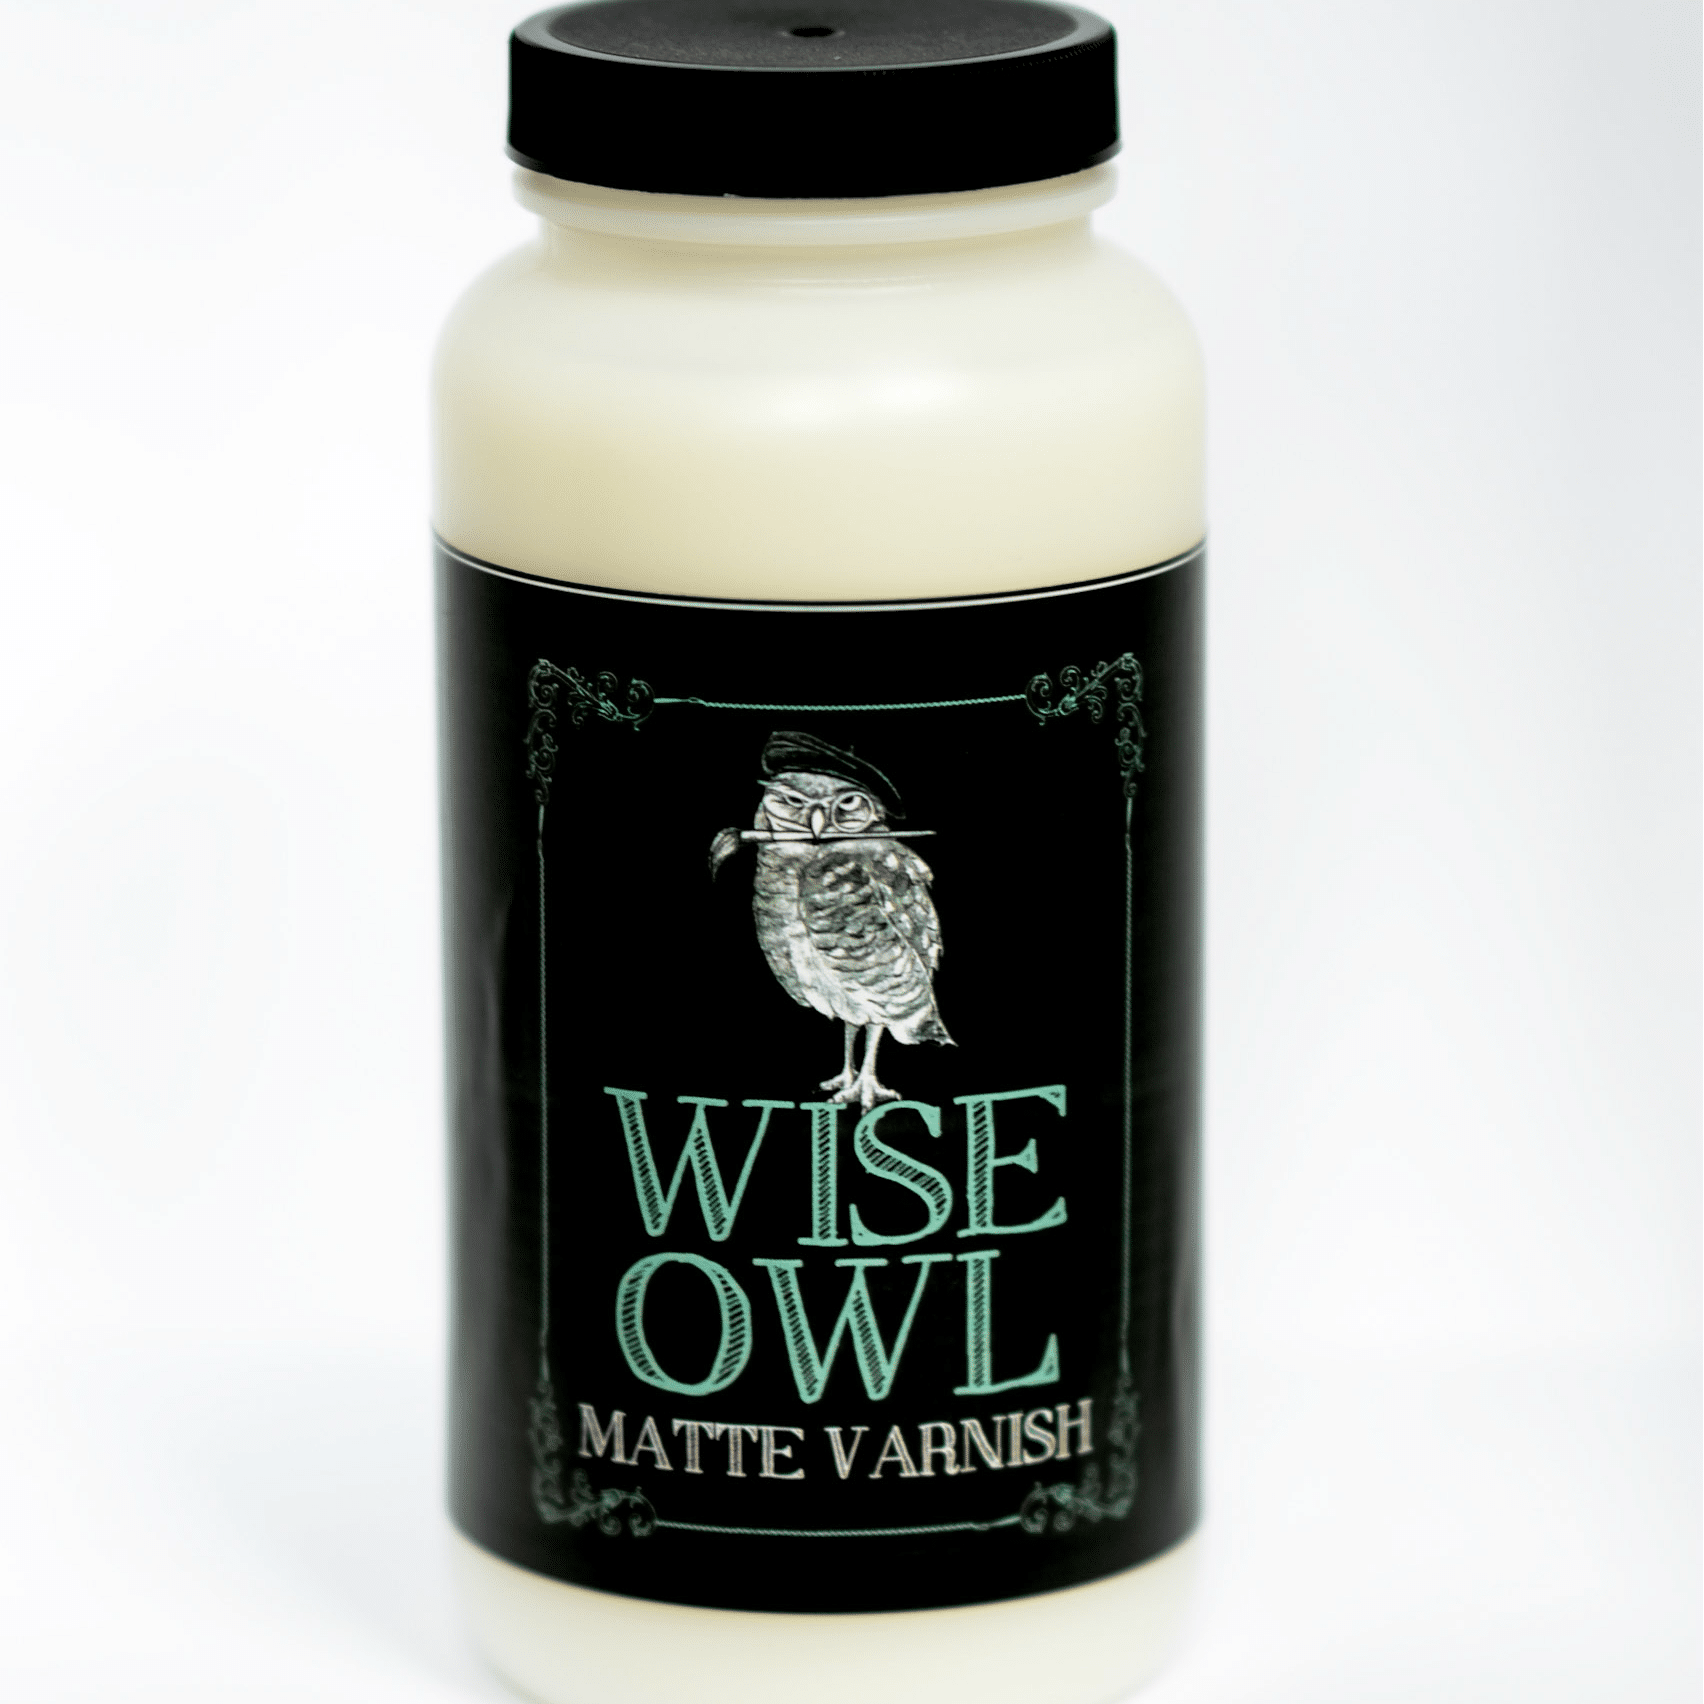 Wise Owl varnish matte